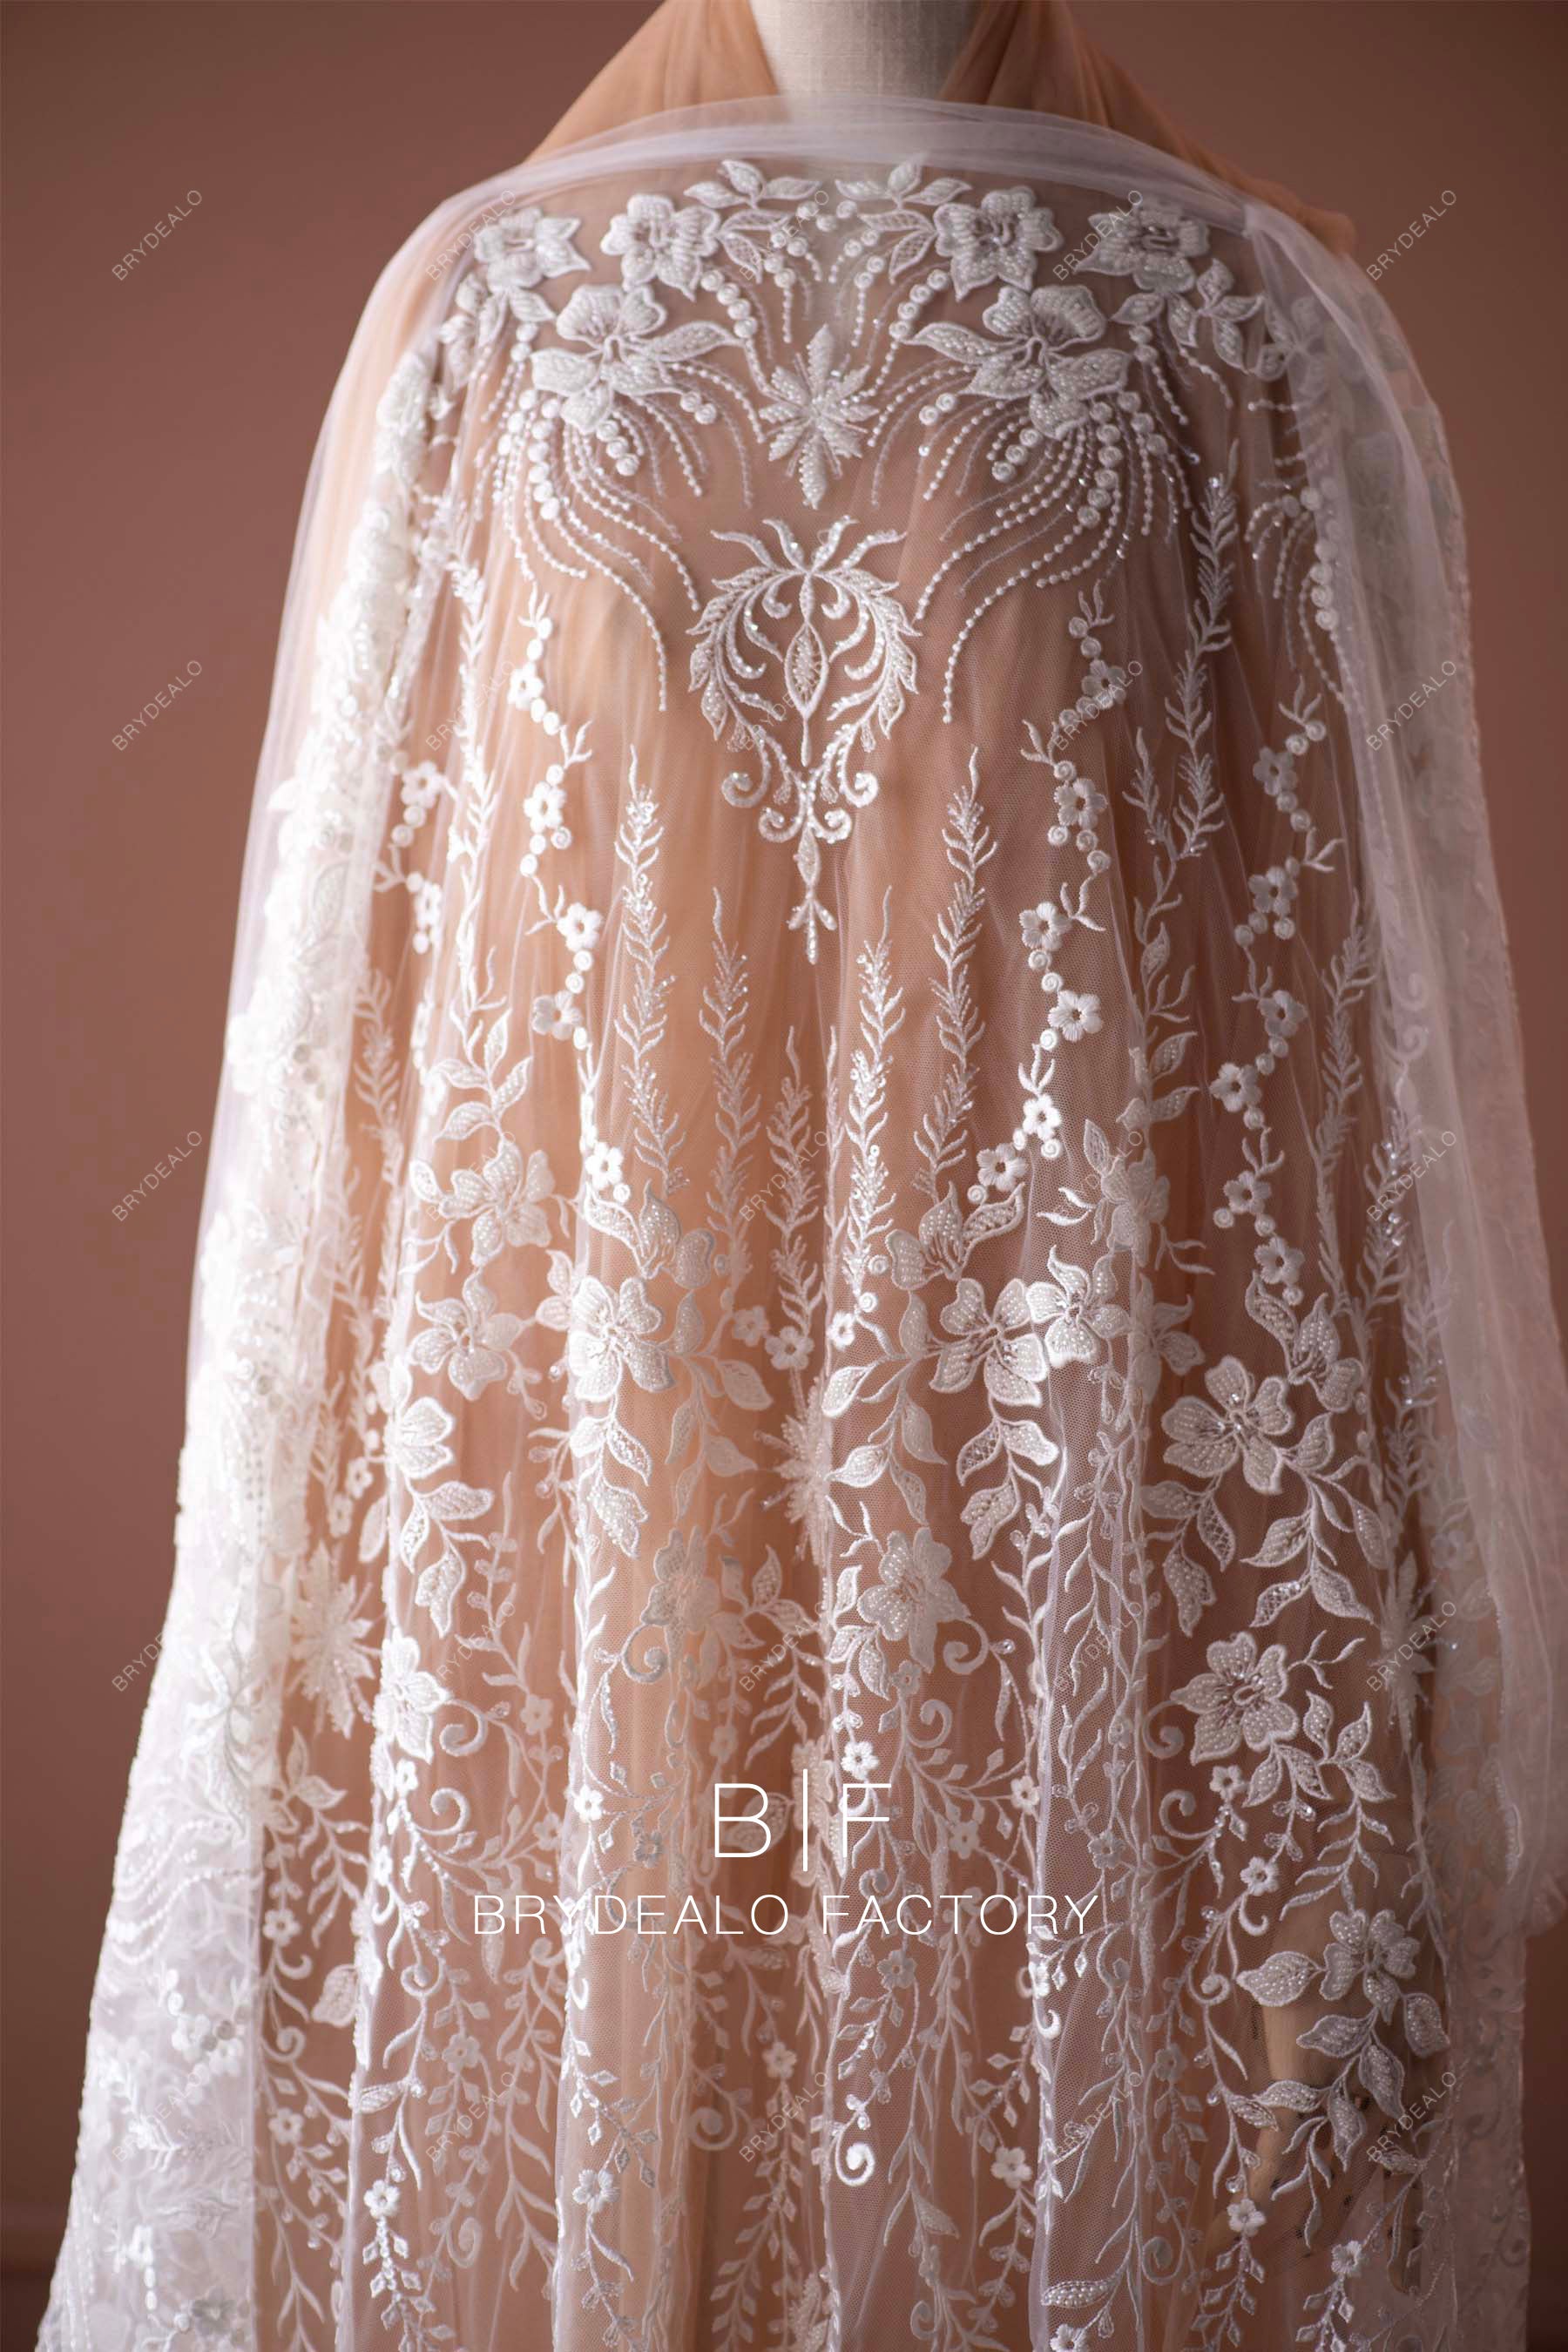 wholesale beaded bridal lace fabric